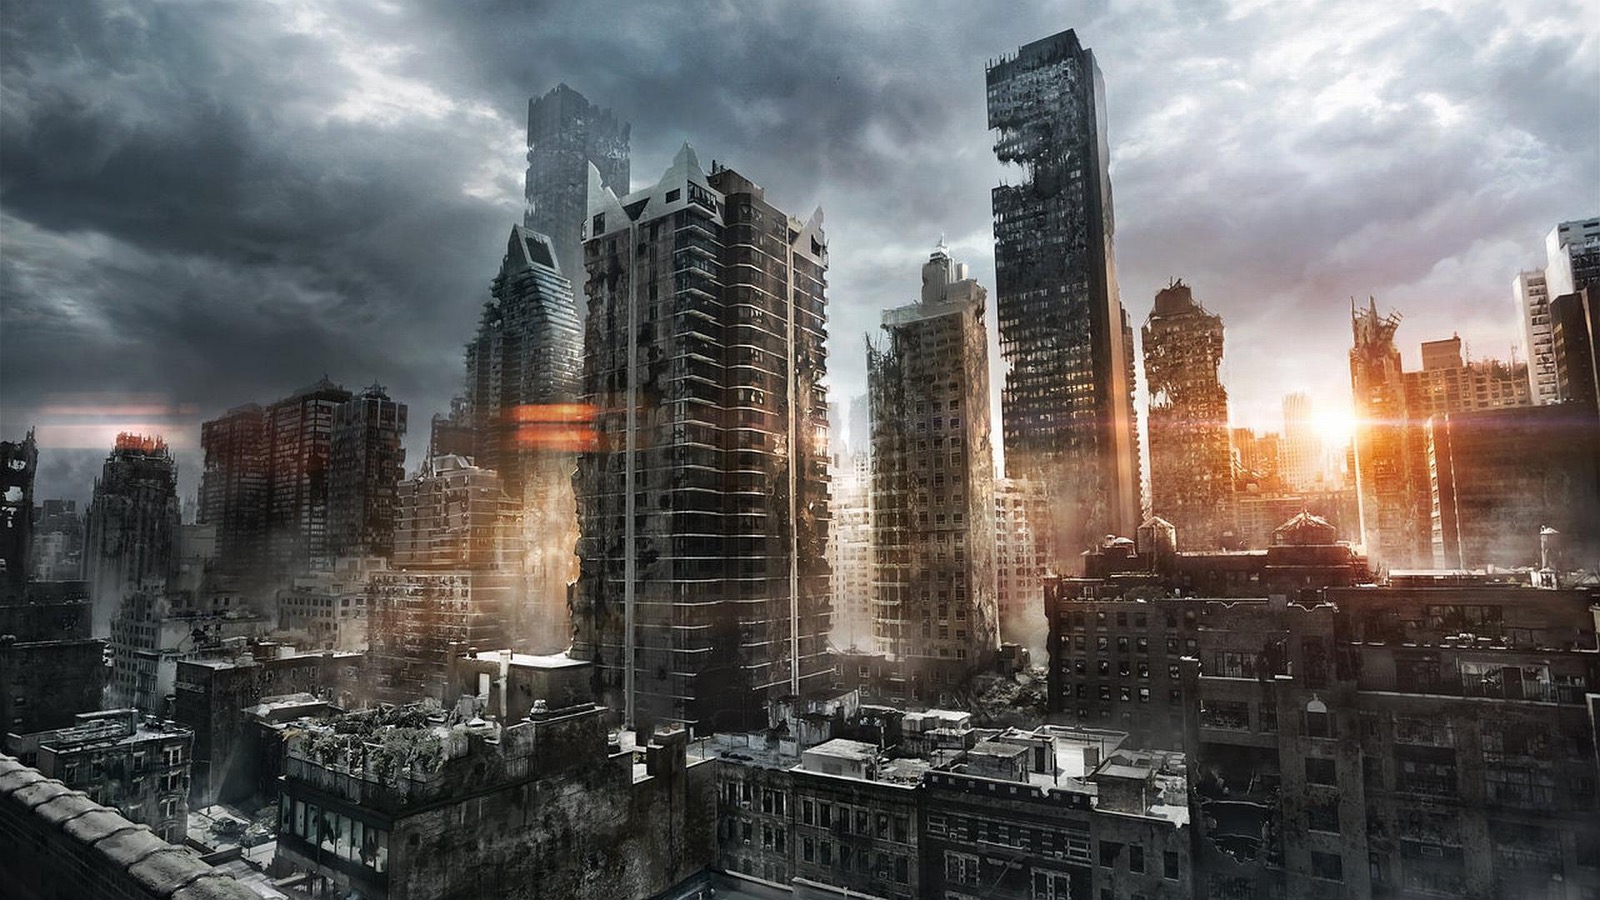 Apocalyptic dystopian city